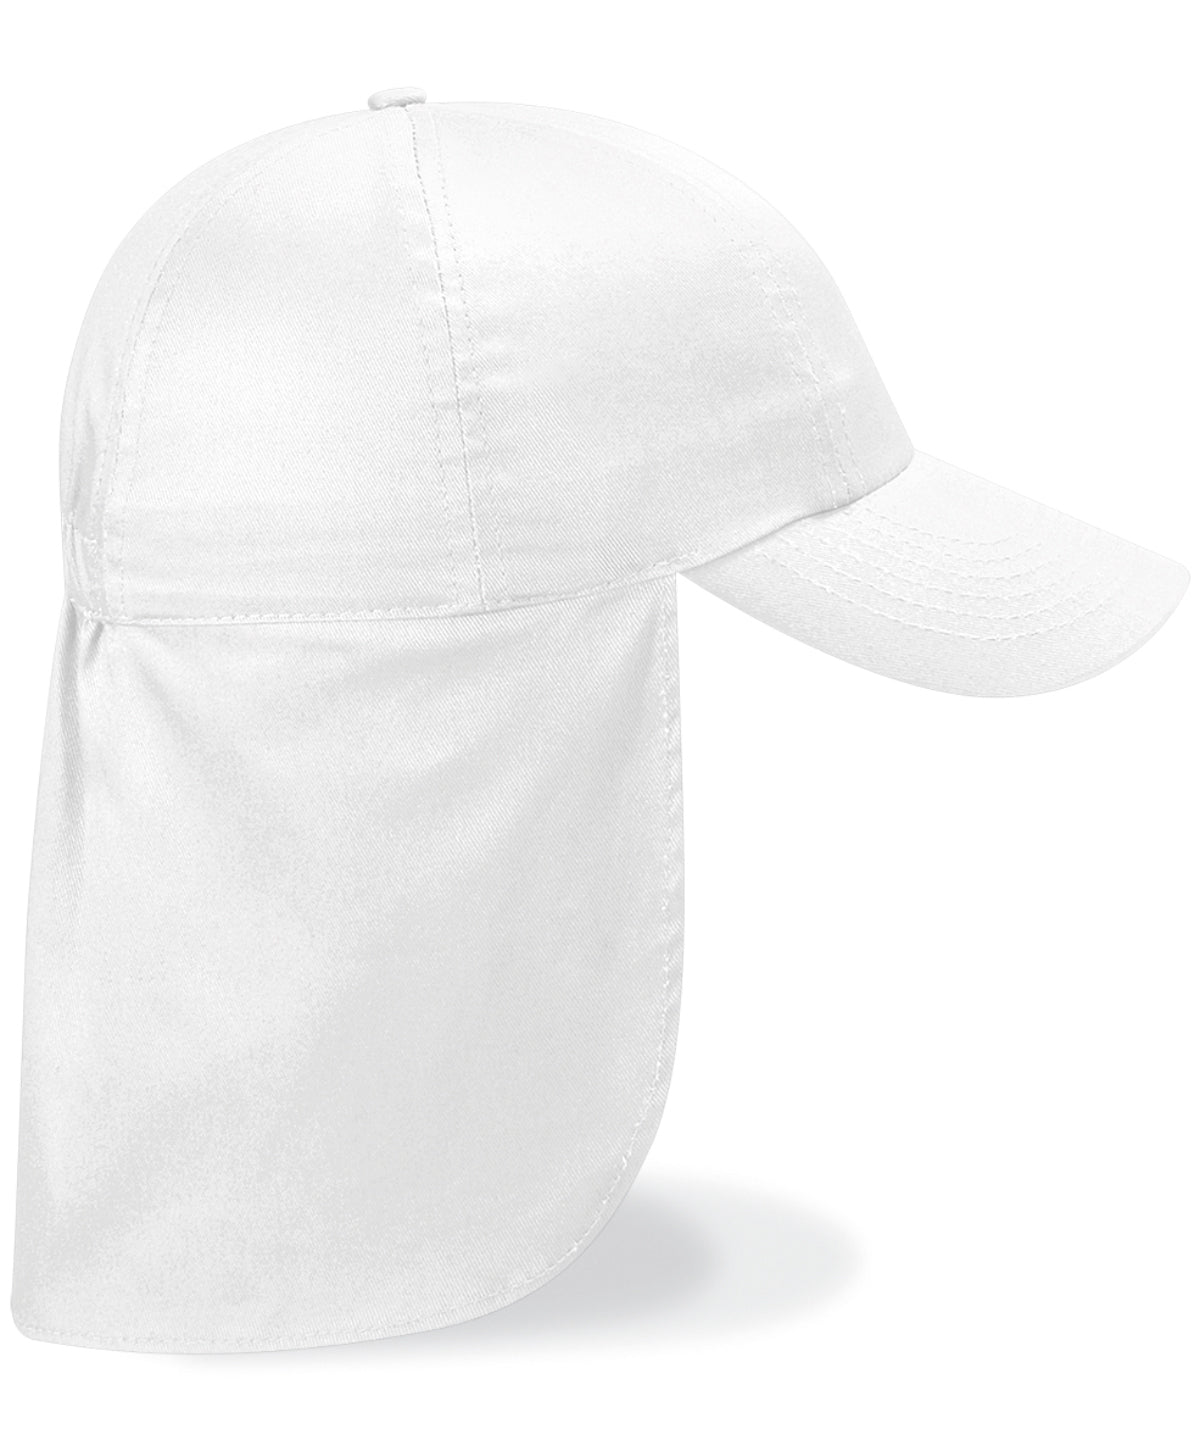 Personalised Caps - White Beechfield Junior legionnaire-style cap